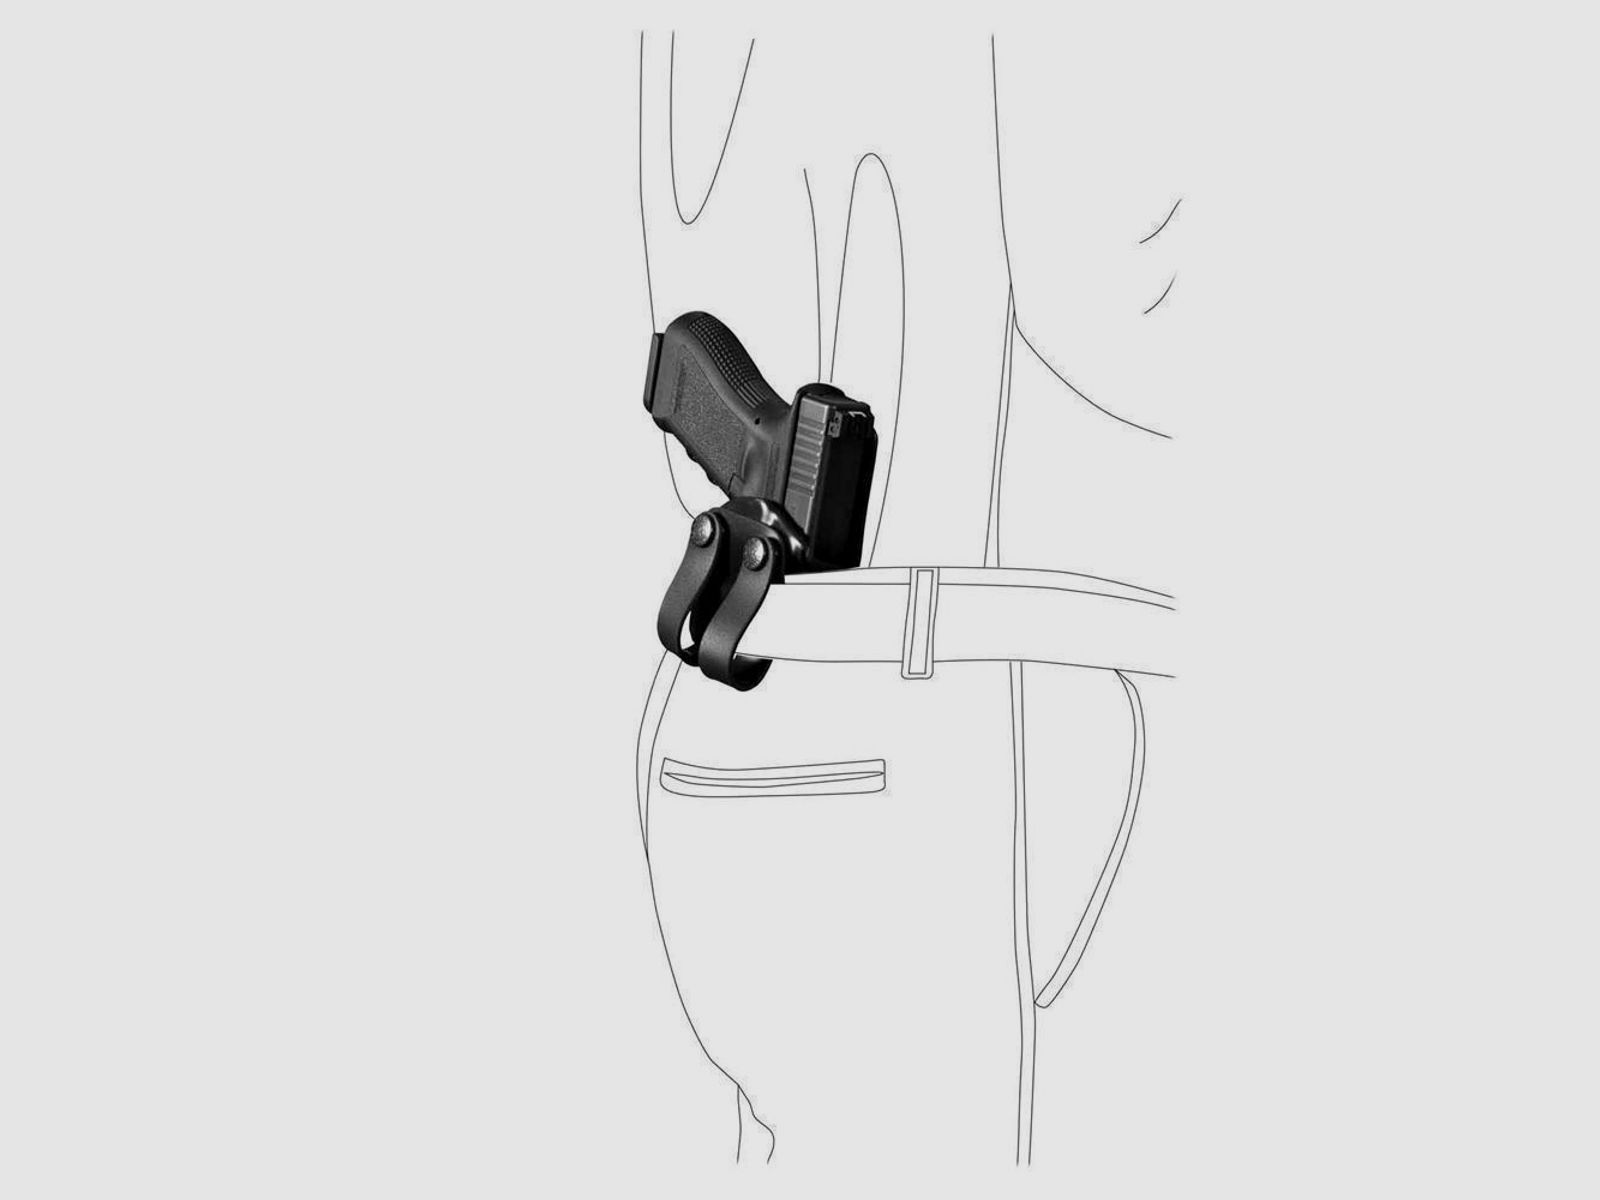 Innenholster "INSIDE RESCUE" Beretta PX4 Storm / Compact Rechtshänder